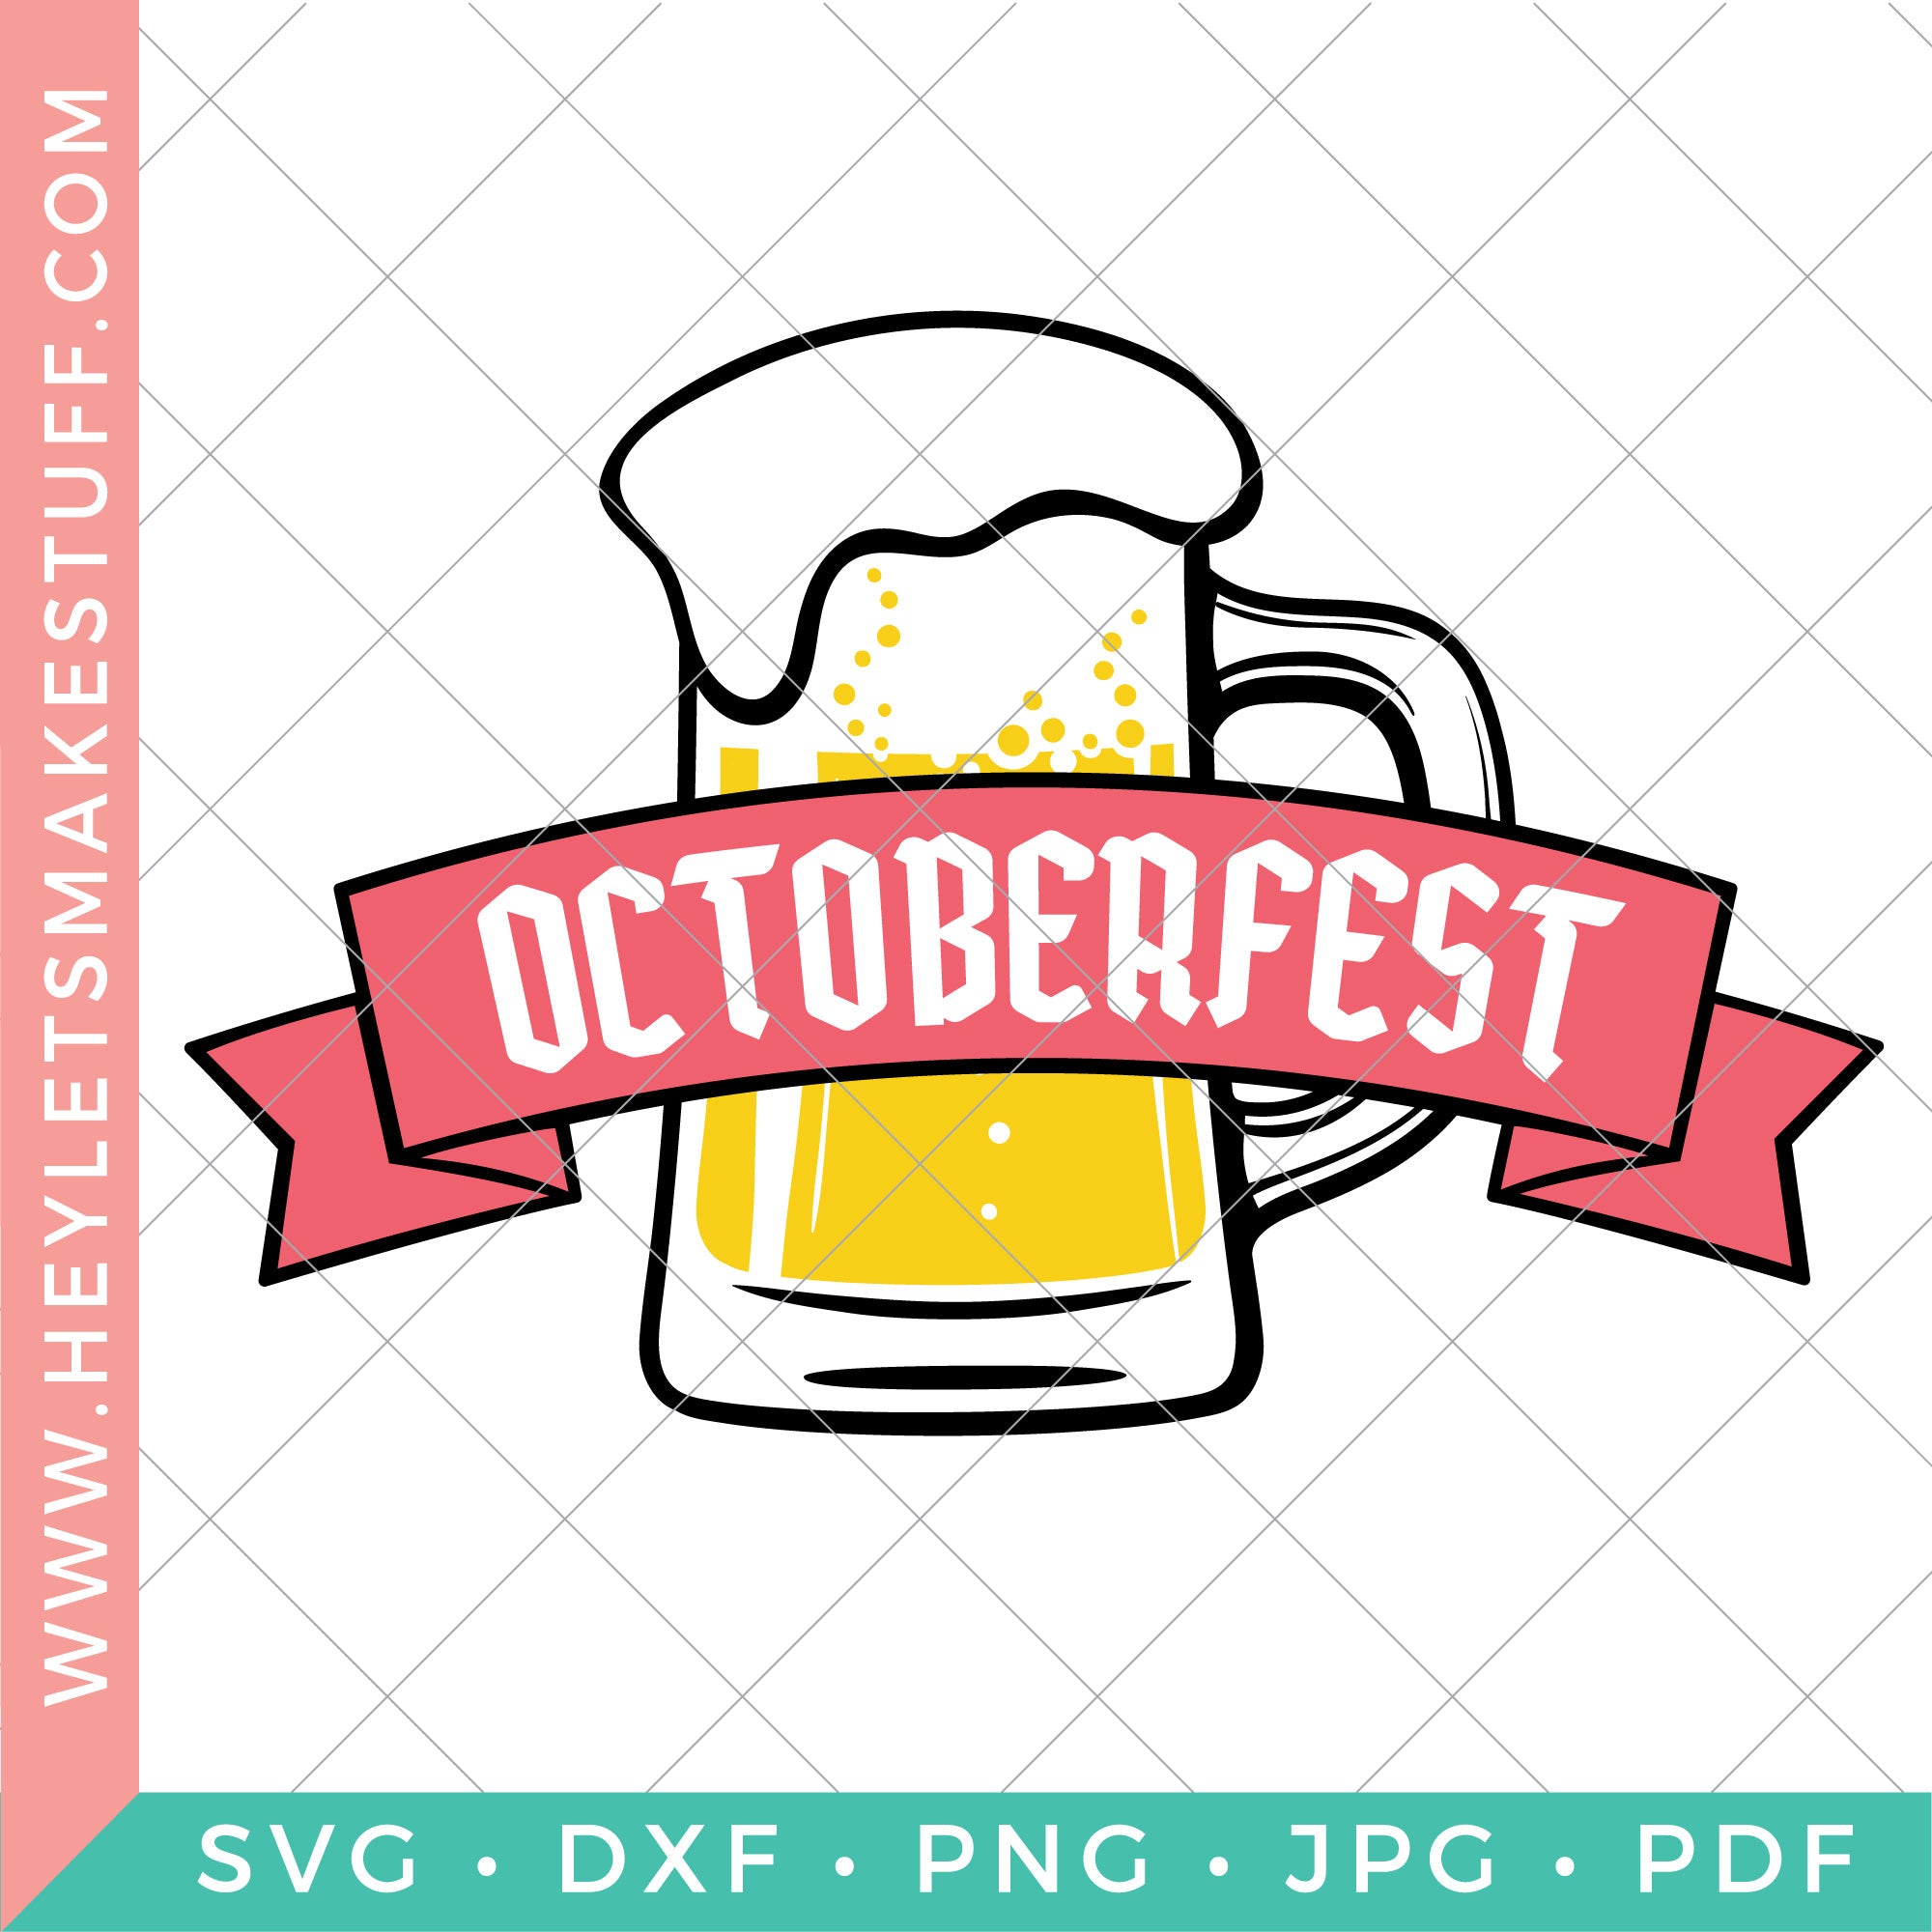 Oktoberfest – Hey, Let's Make Stuff